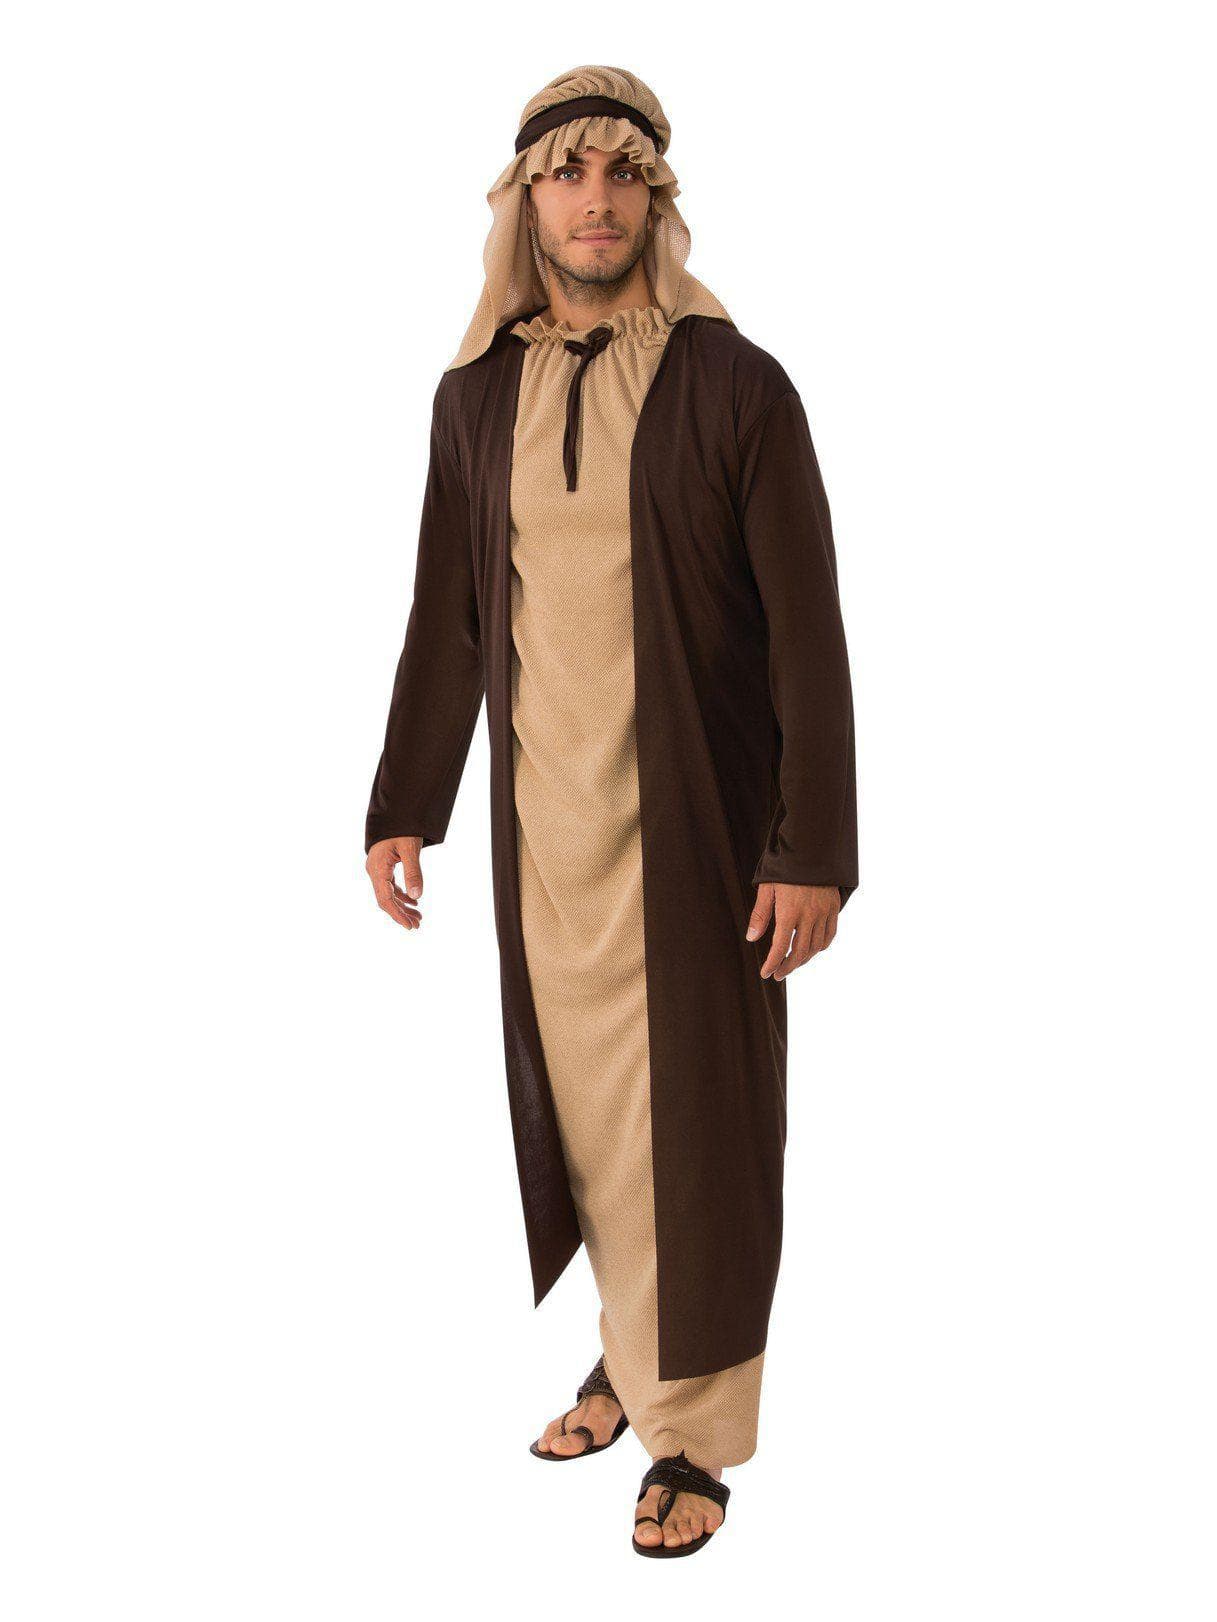 Adult Saint Joseph Costume - costumes.com